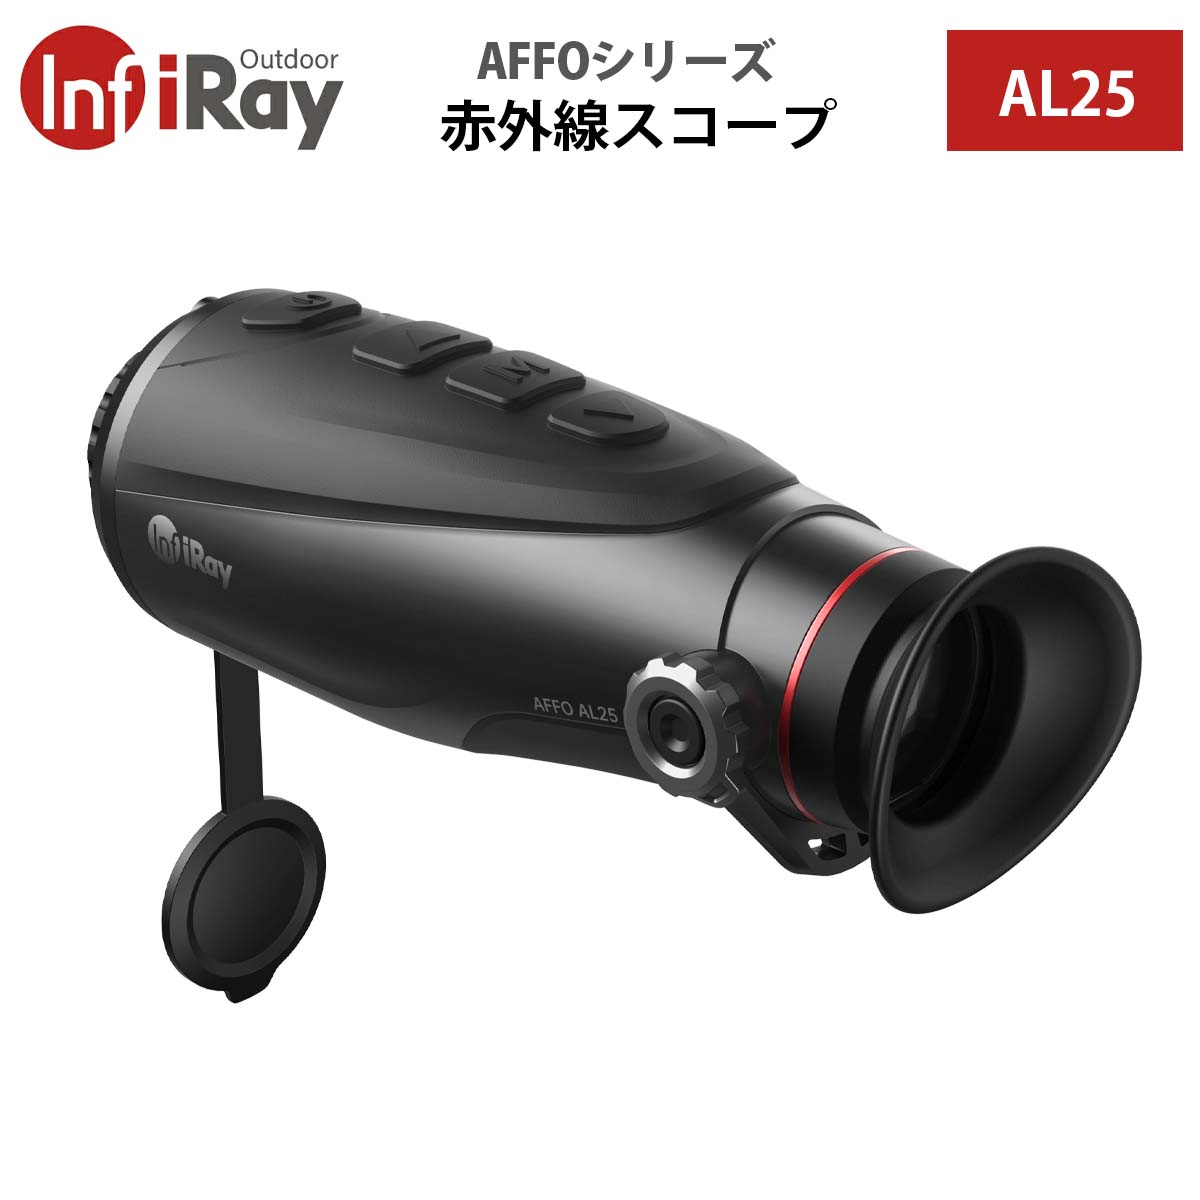 iRay【メーカー正規品】赤外線スコープ AFFOシリーズ AL25｜赤外線単眼鏡 ファッショナブル コンパクト IR高感度検出器 高速ストレージ 写真 動画 HDMI規格 低電力タイプ スタジアム・レンジファインディング PIP 画像モード